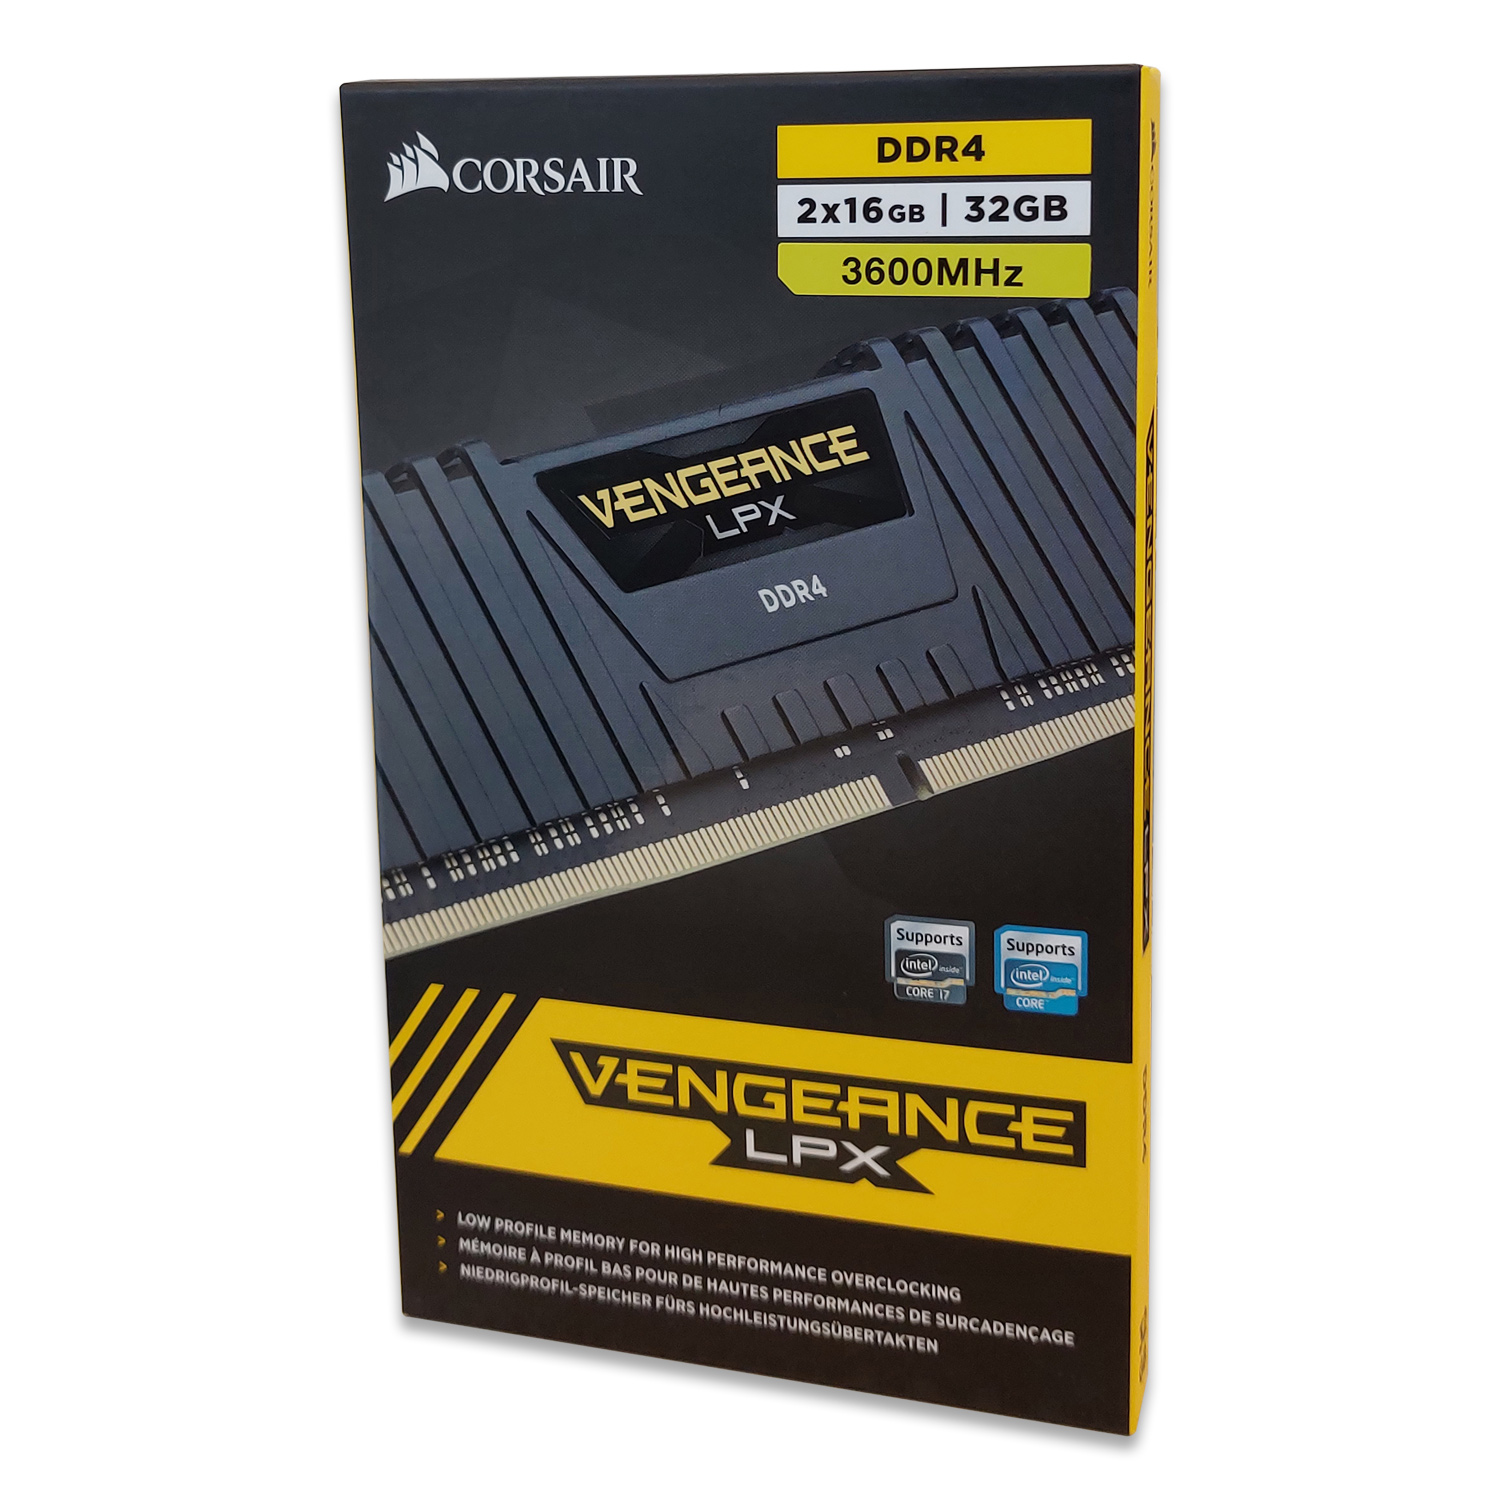 Corsair Vengeance LPX Dual 2x16GB 1.35V Desktop Memory, schwarz